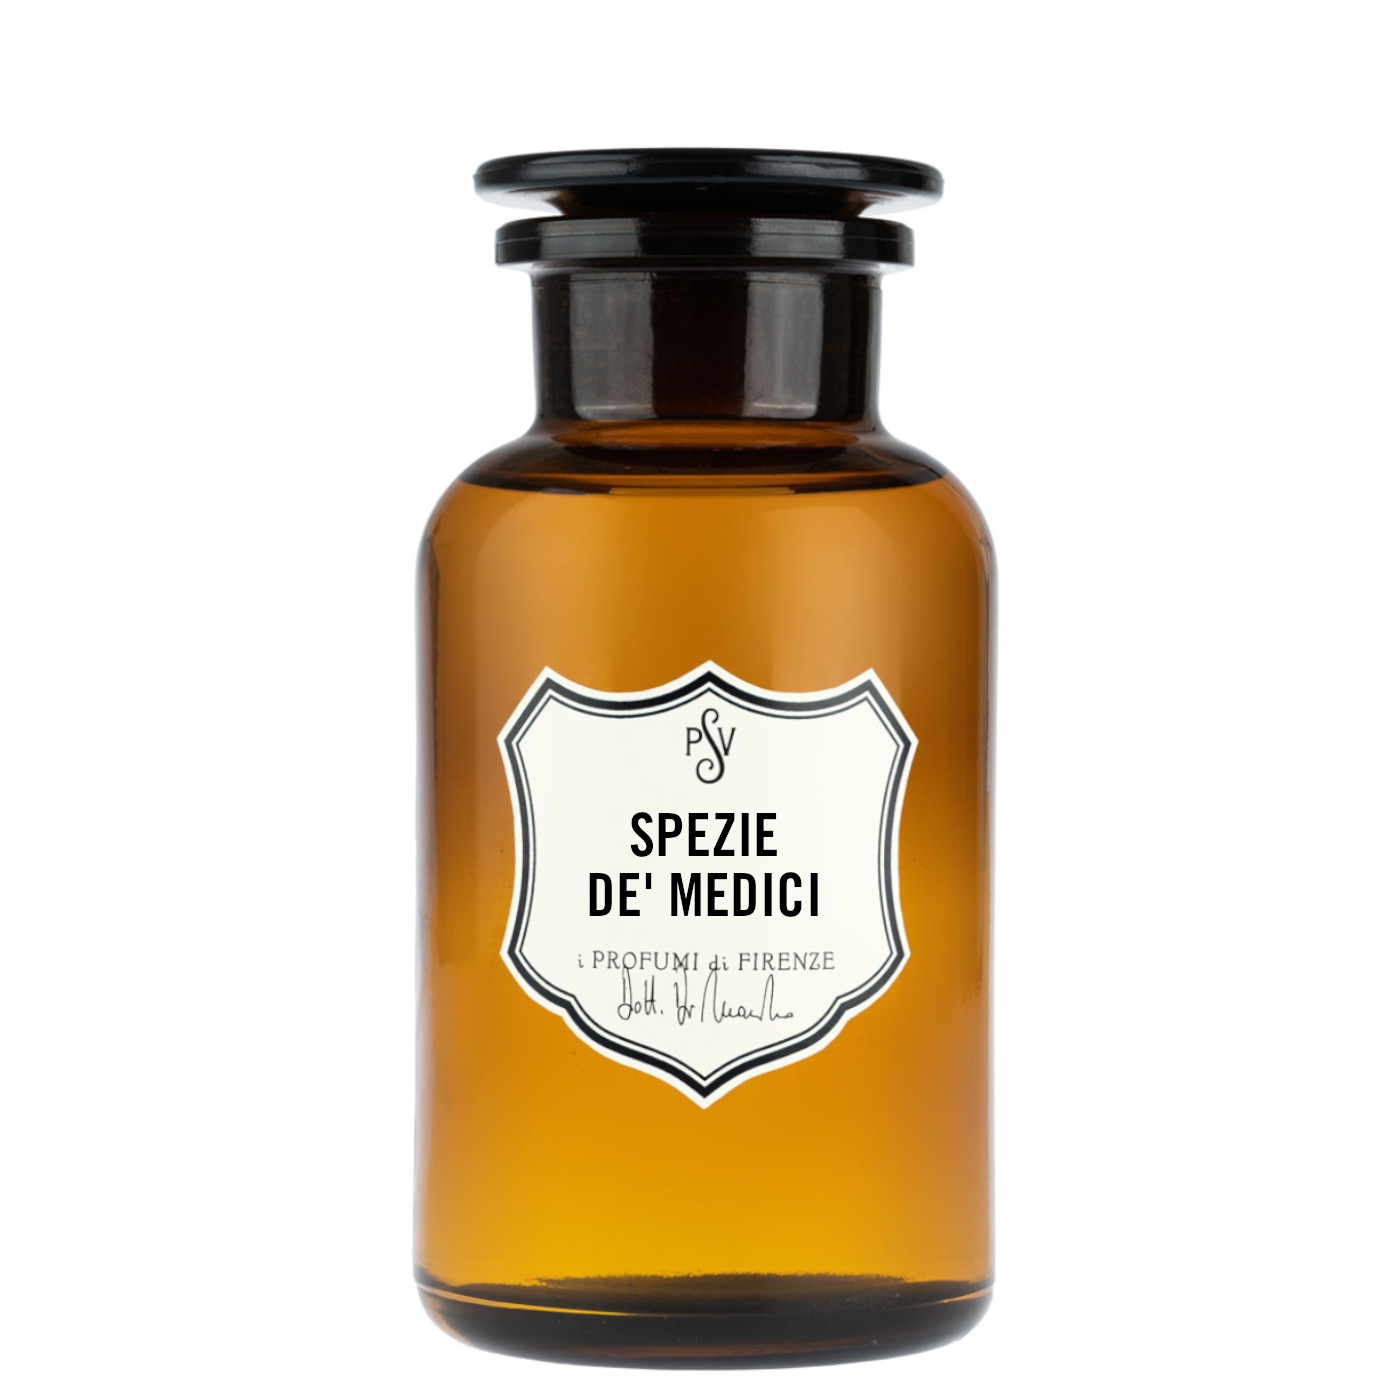 SPEZIE DE' MEDICI - Home Fragrance-4516